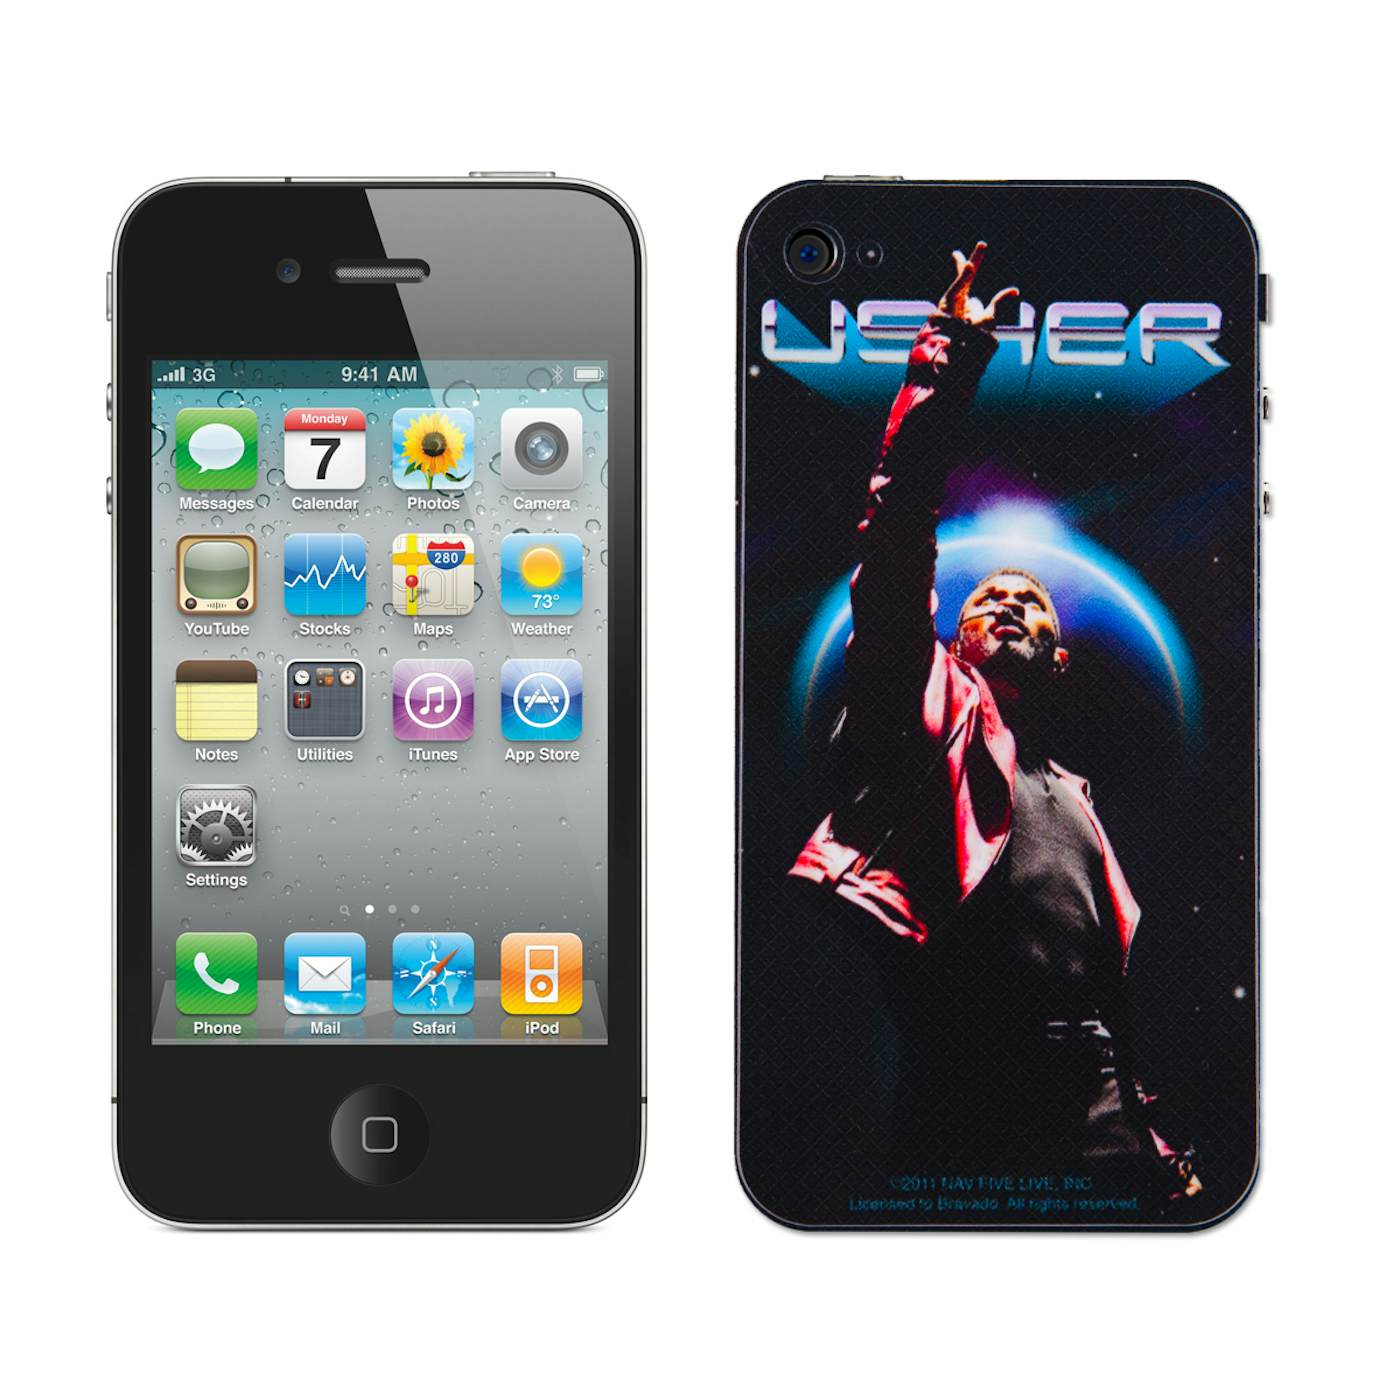 Usher Up Above iPhone Skin